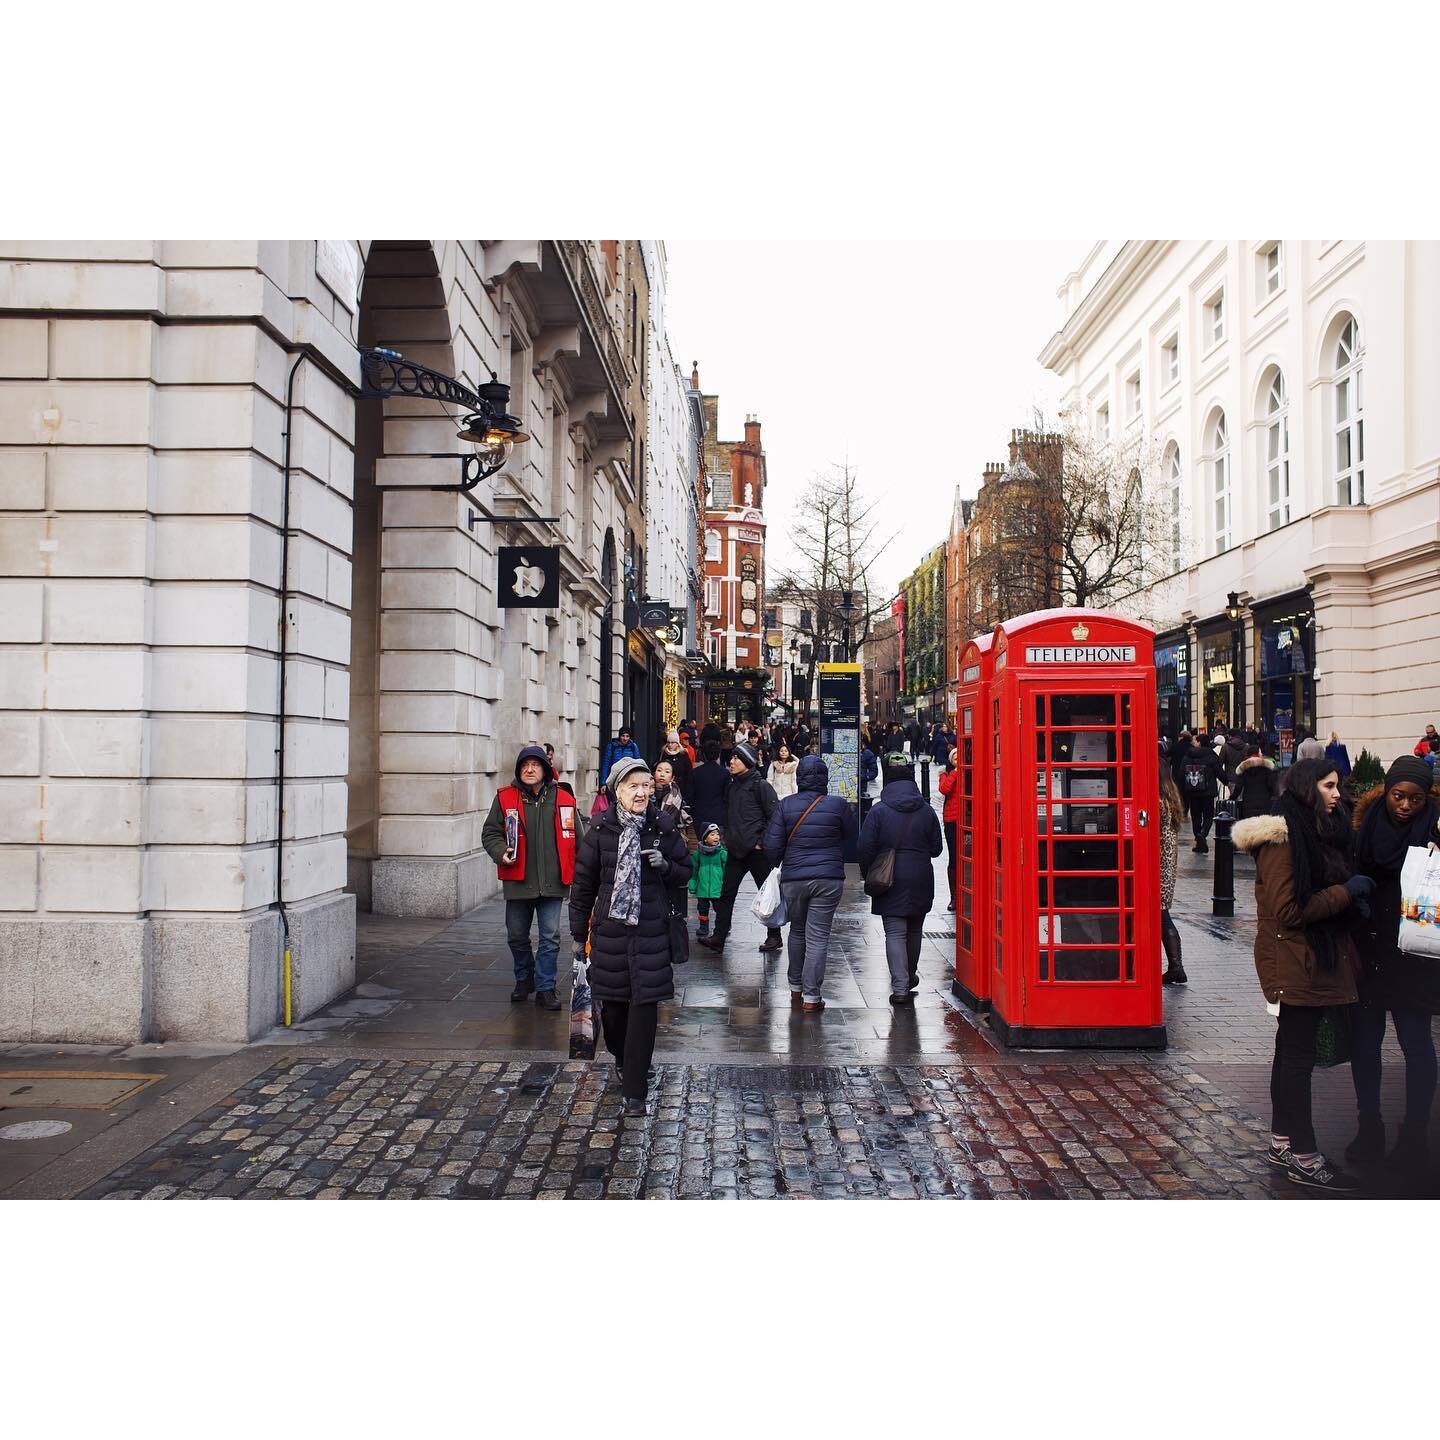 Random snippets of London, BC 

*Before Covid

#fujifilm #fujifilmx100t #fujifilmx100tuser #london #photography #streetphotography #beforecovid19 #streetphotographer #london🇬🇧 #vsco #vscogirl #people #peopleoflondon #streetsoflondon #streetsoflondo